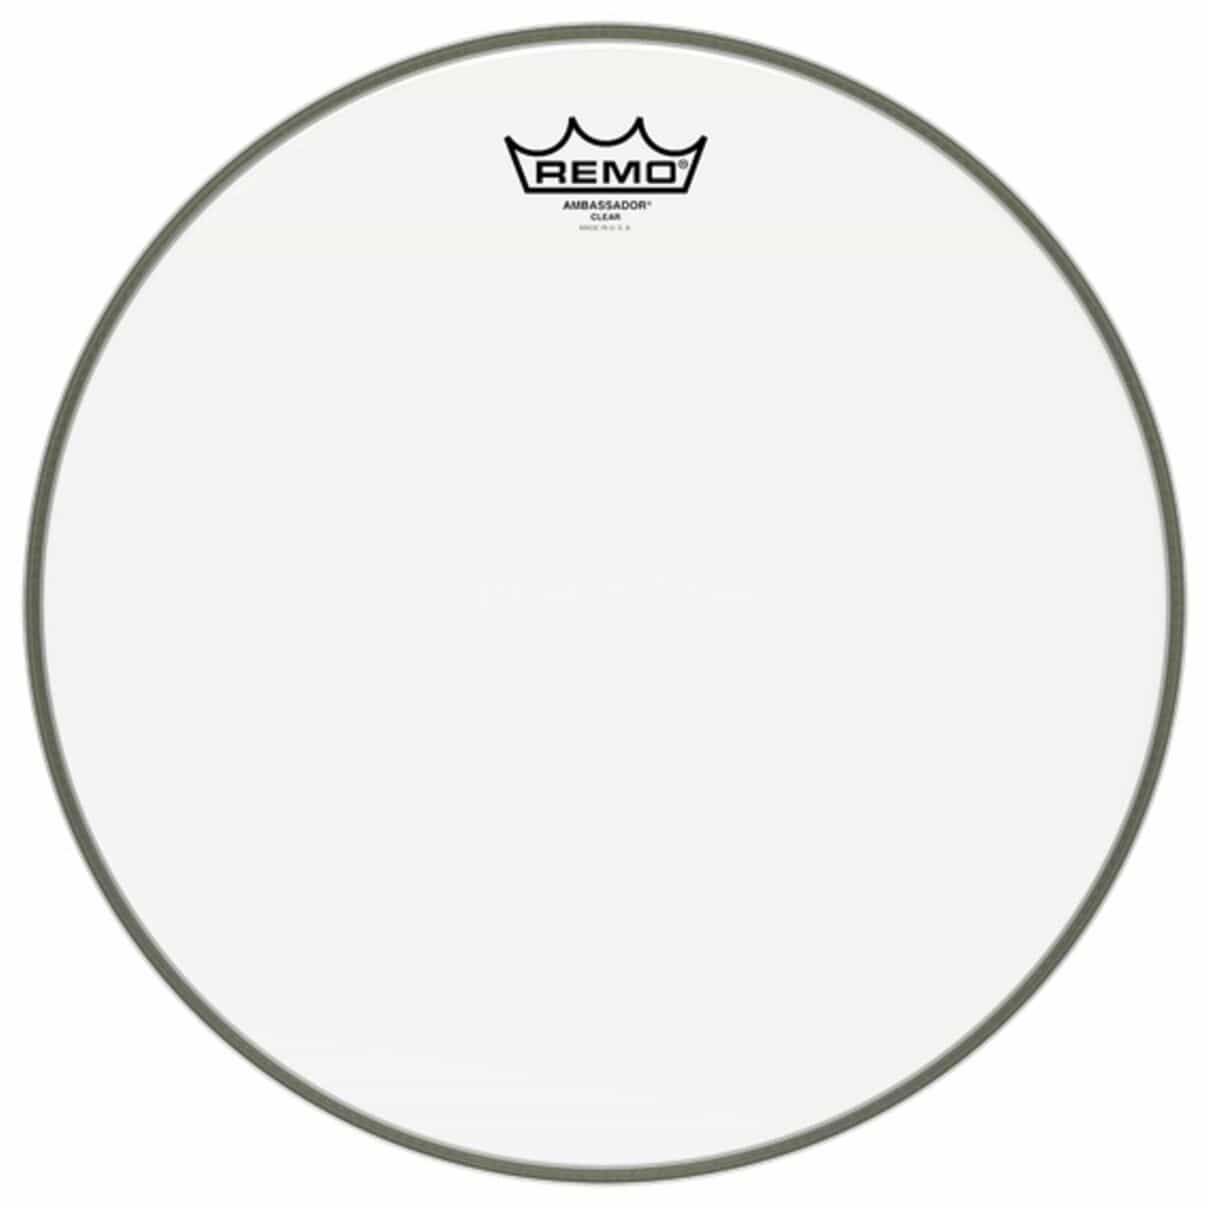 Remo Ambassador - Bass Drum Fell - 24  - Clear